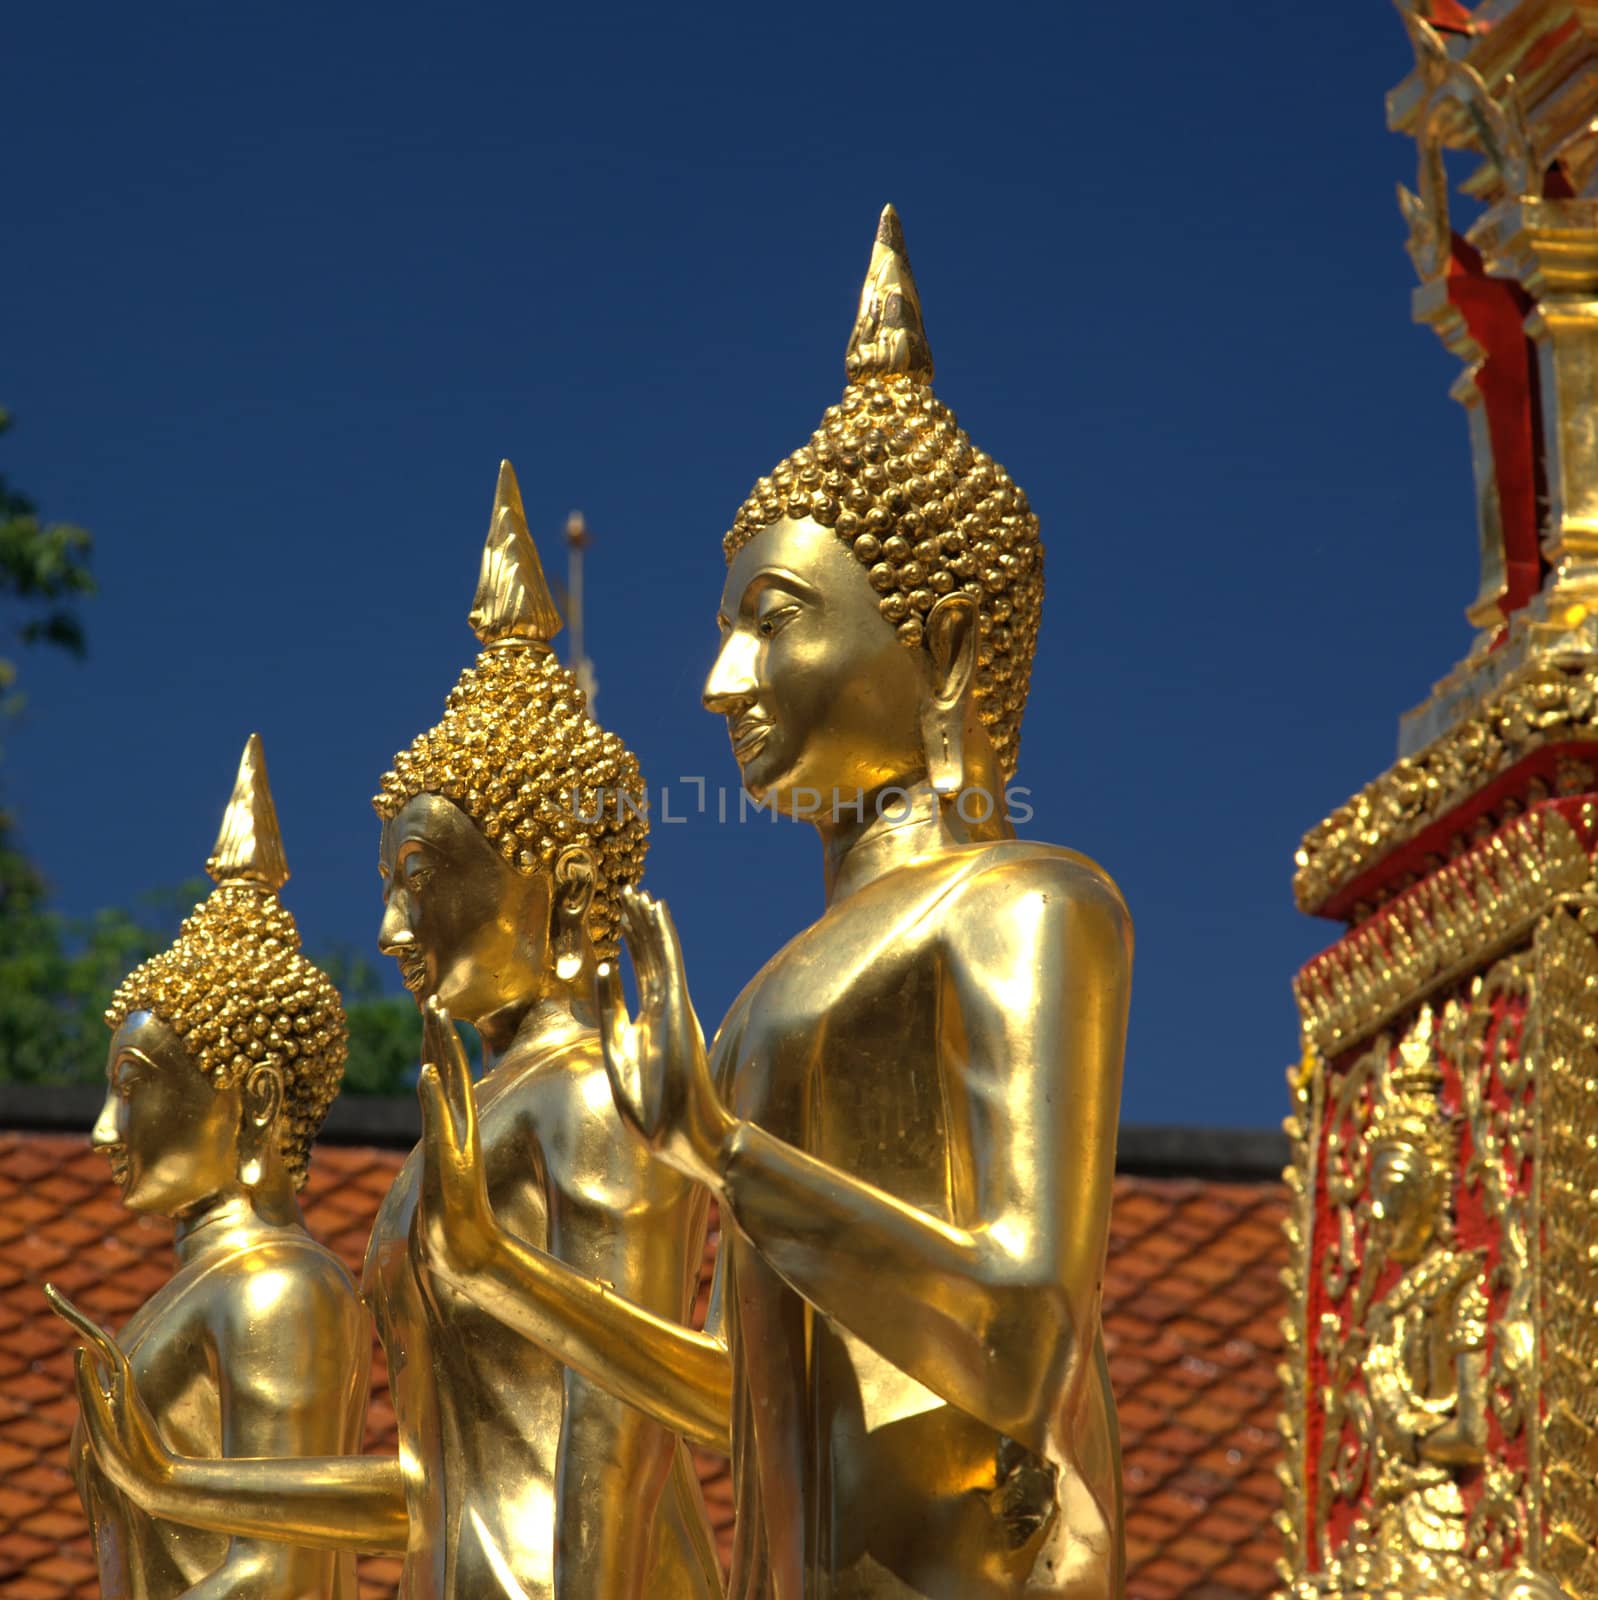 Three Golden Buddhas against a blue sky  by Farina6000